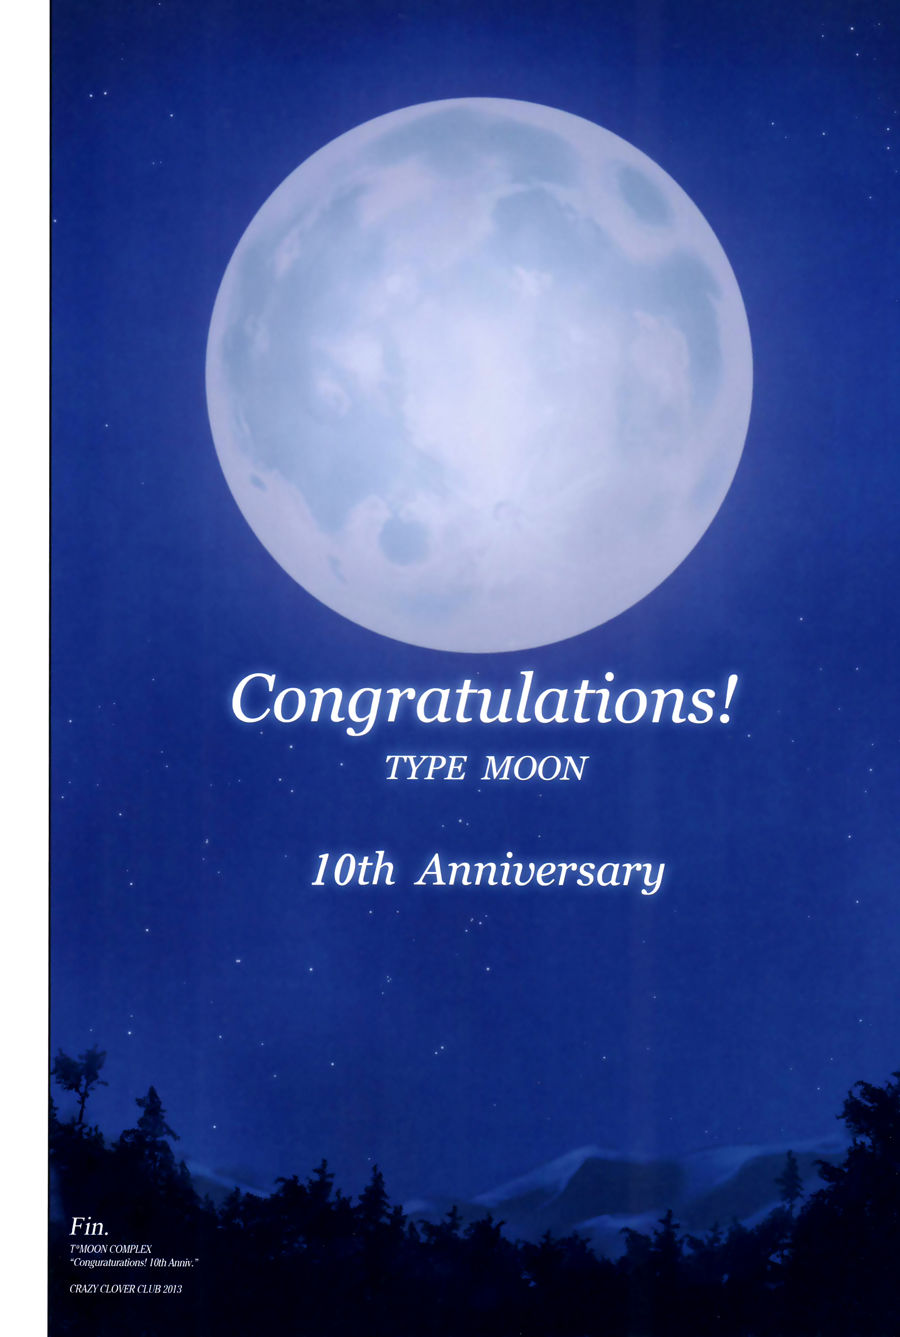 [Crazy Clover Club (Shirotsumekusa)] T-MOON COMPLEX Congratulations! 10th Anniversary (Various)  [Exas] - part 2